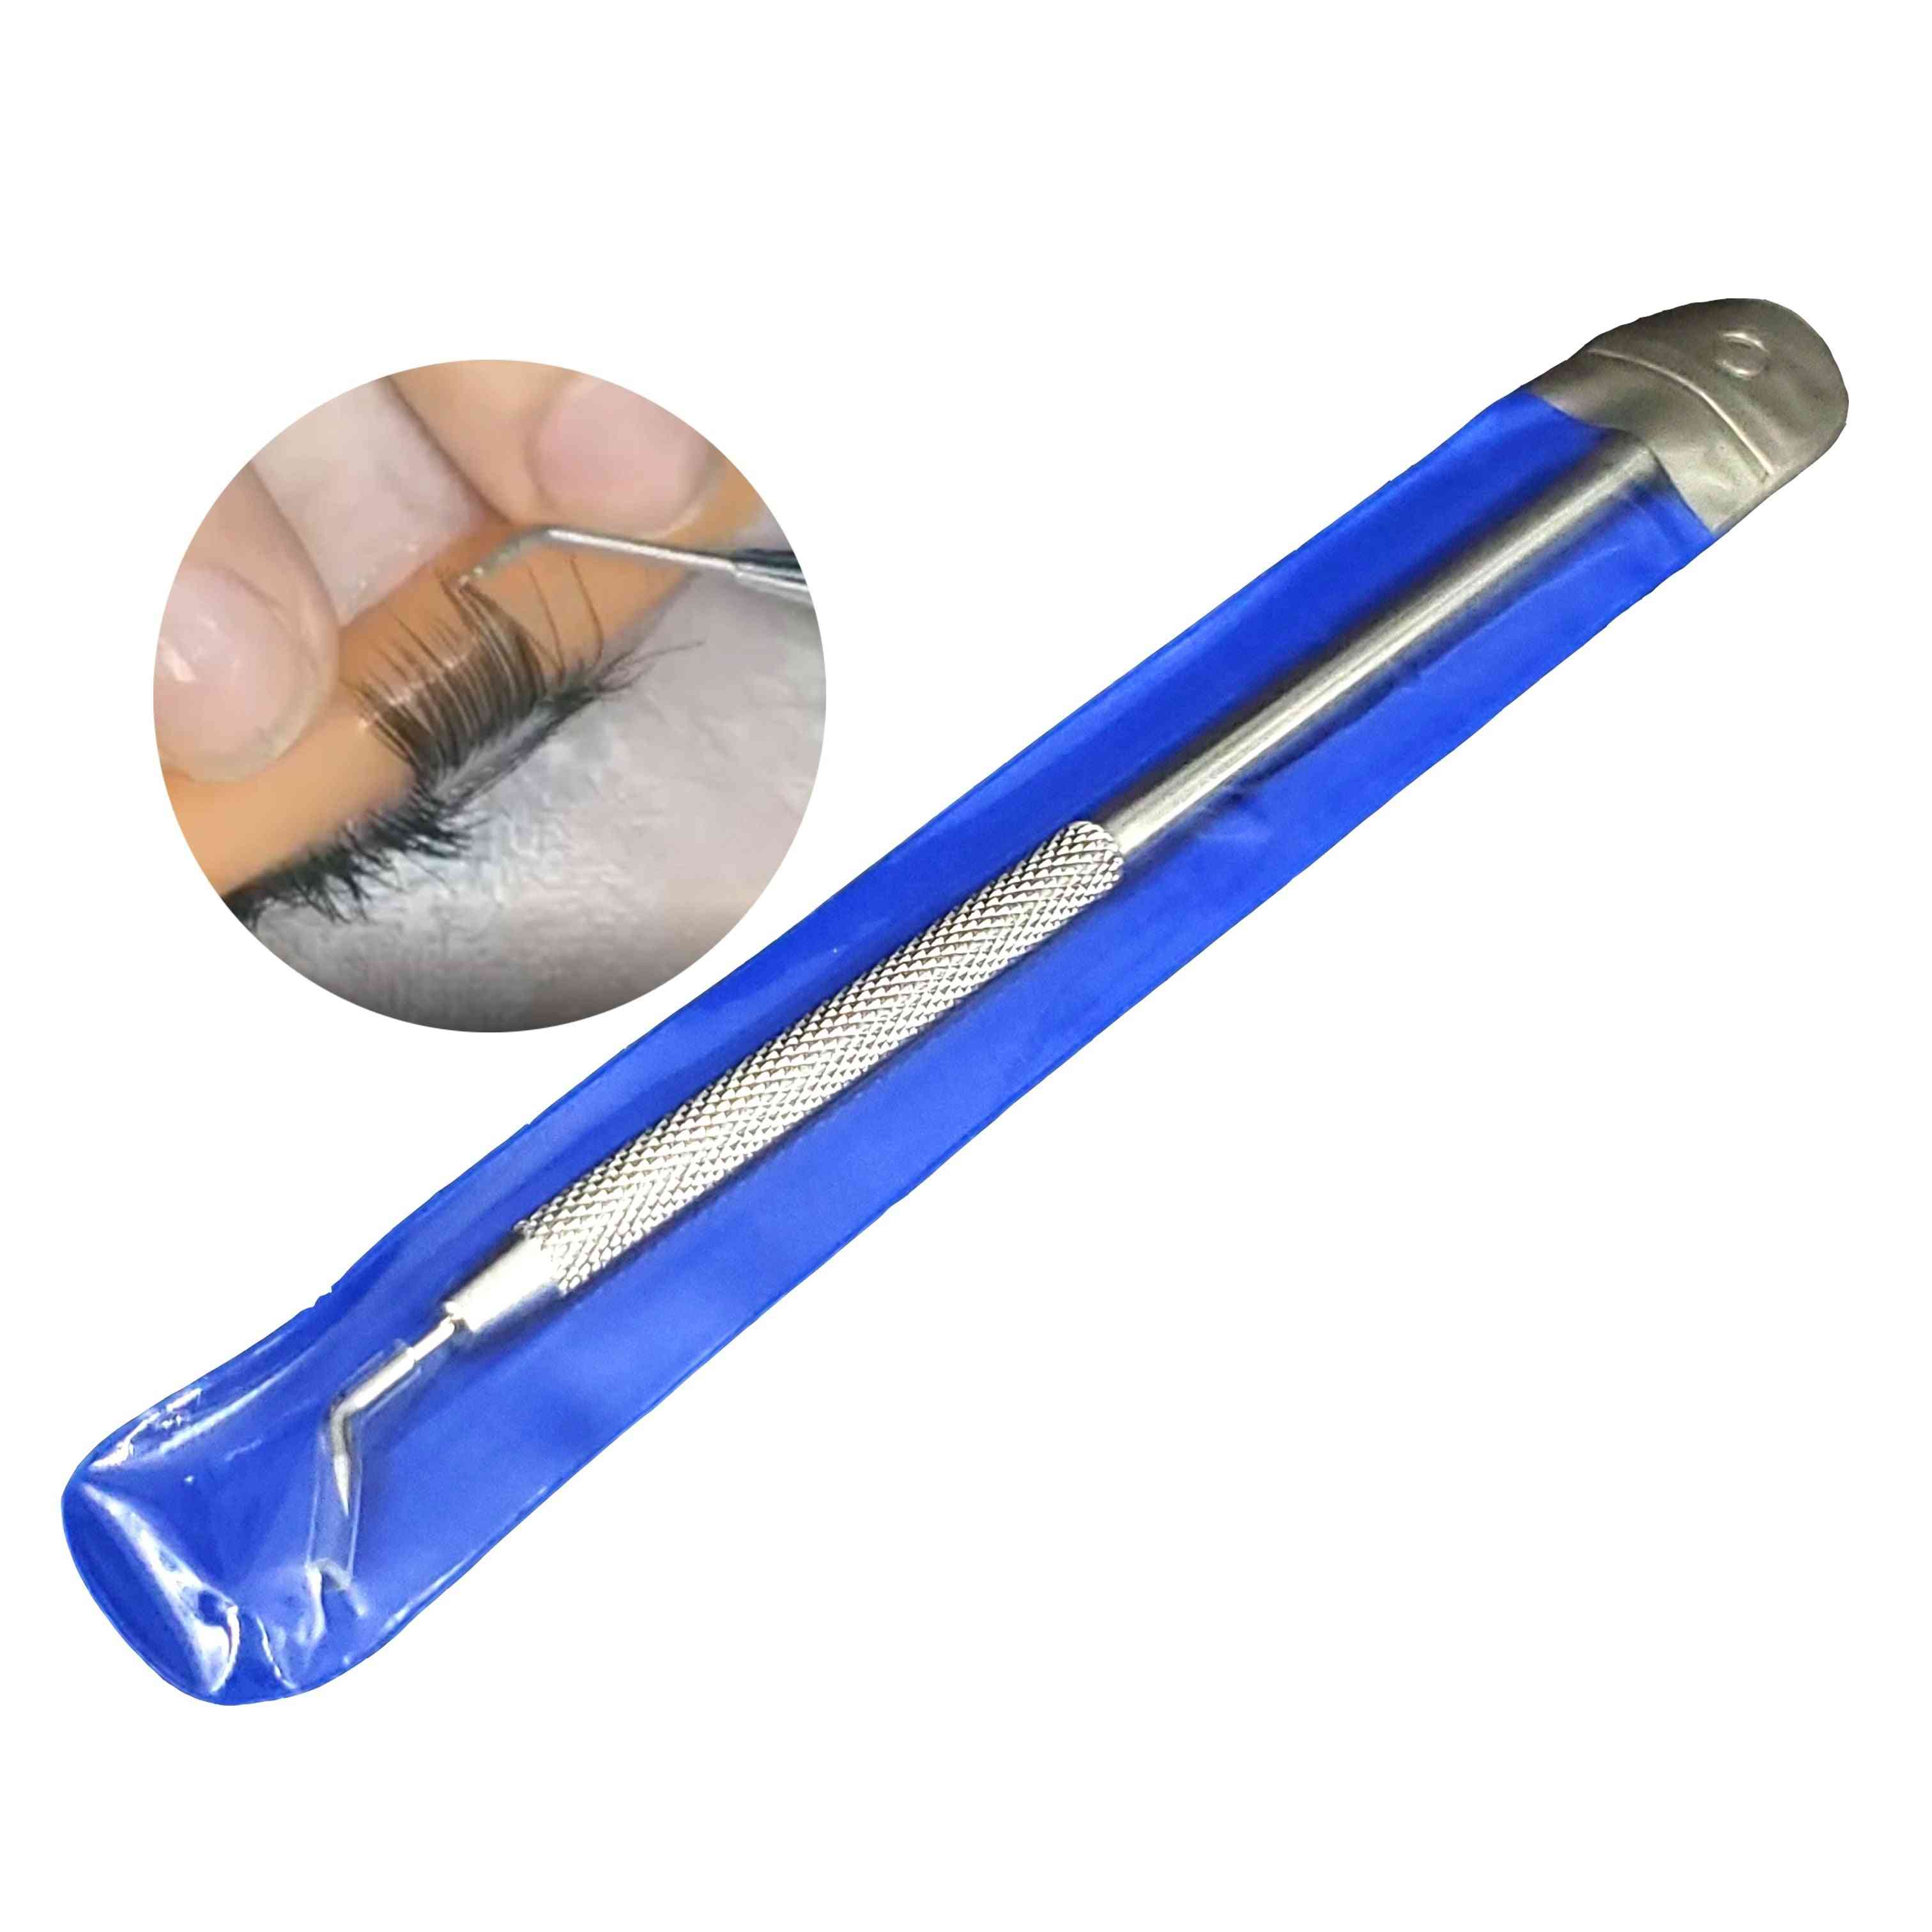 Tool For Eyelash Perm Lash Lifting And Separating